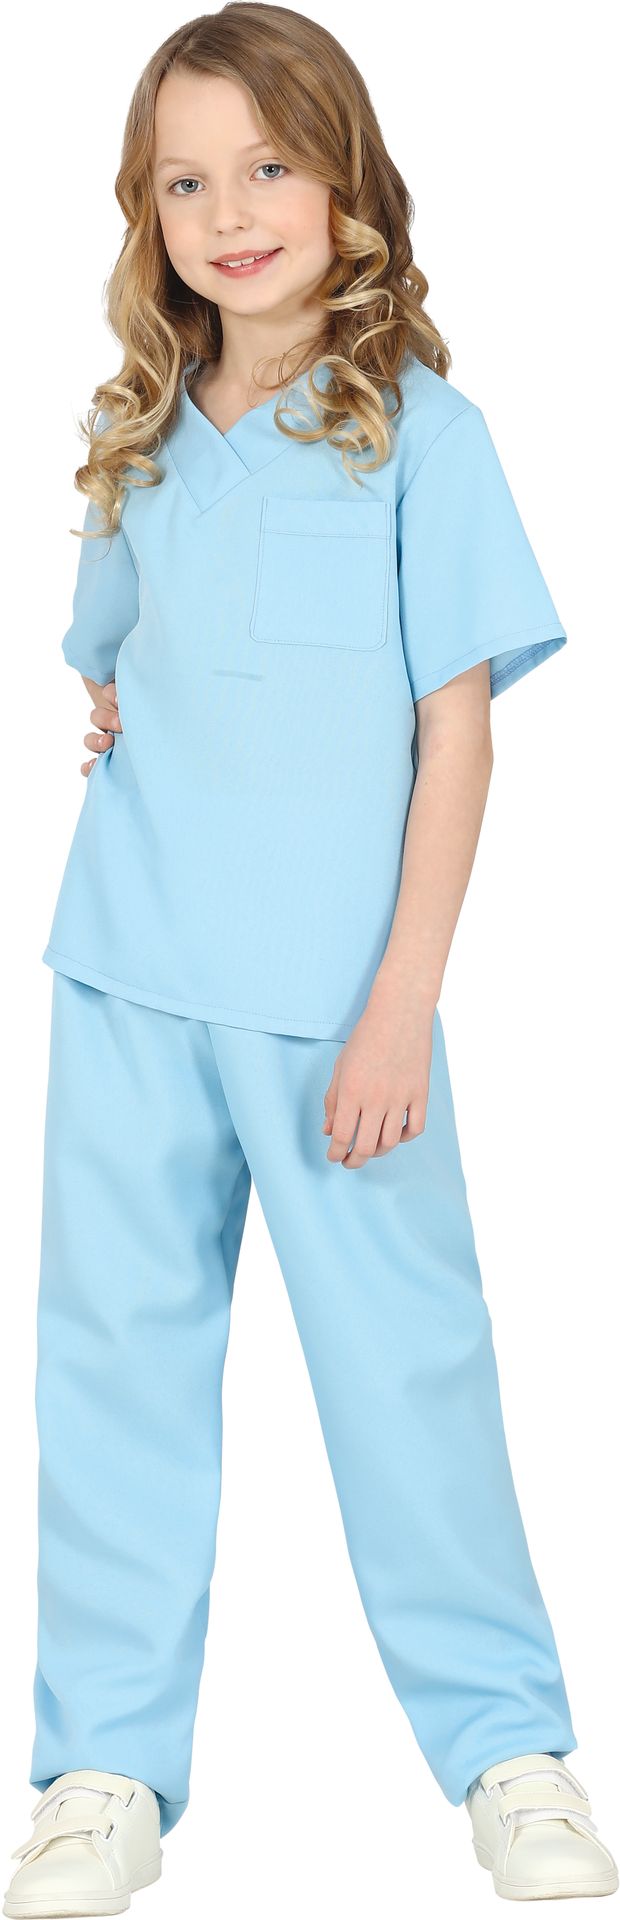 Verpleegkundige blauw outfit kind